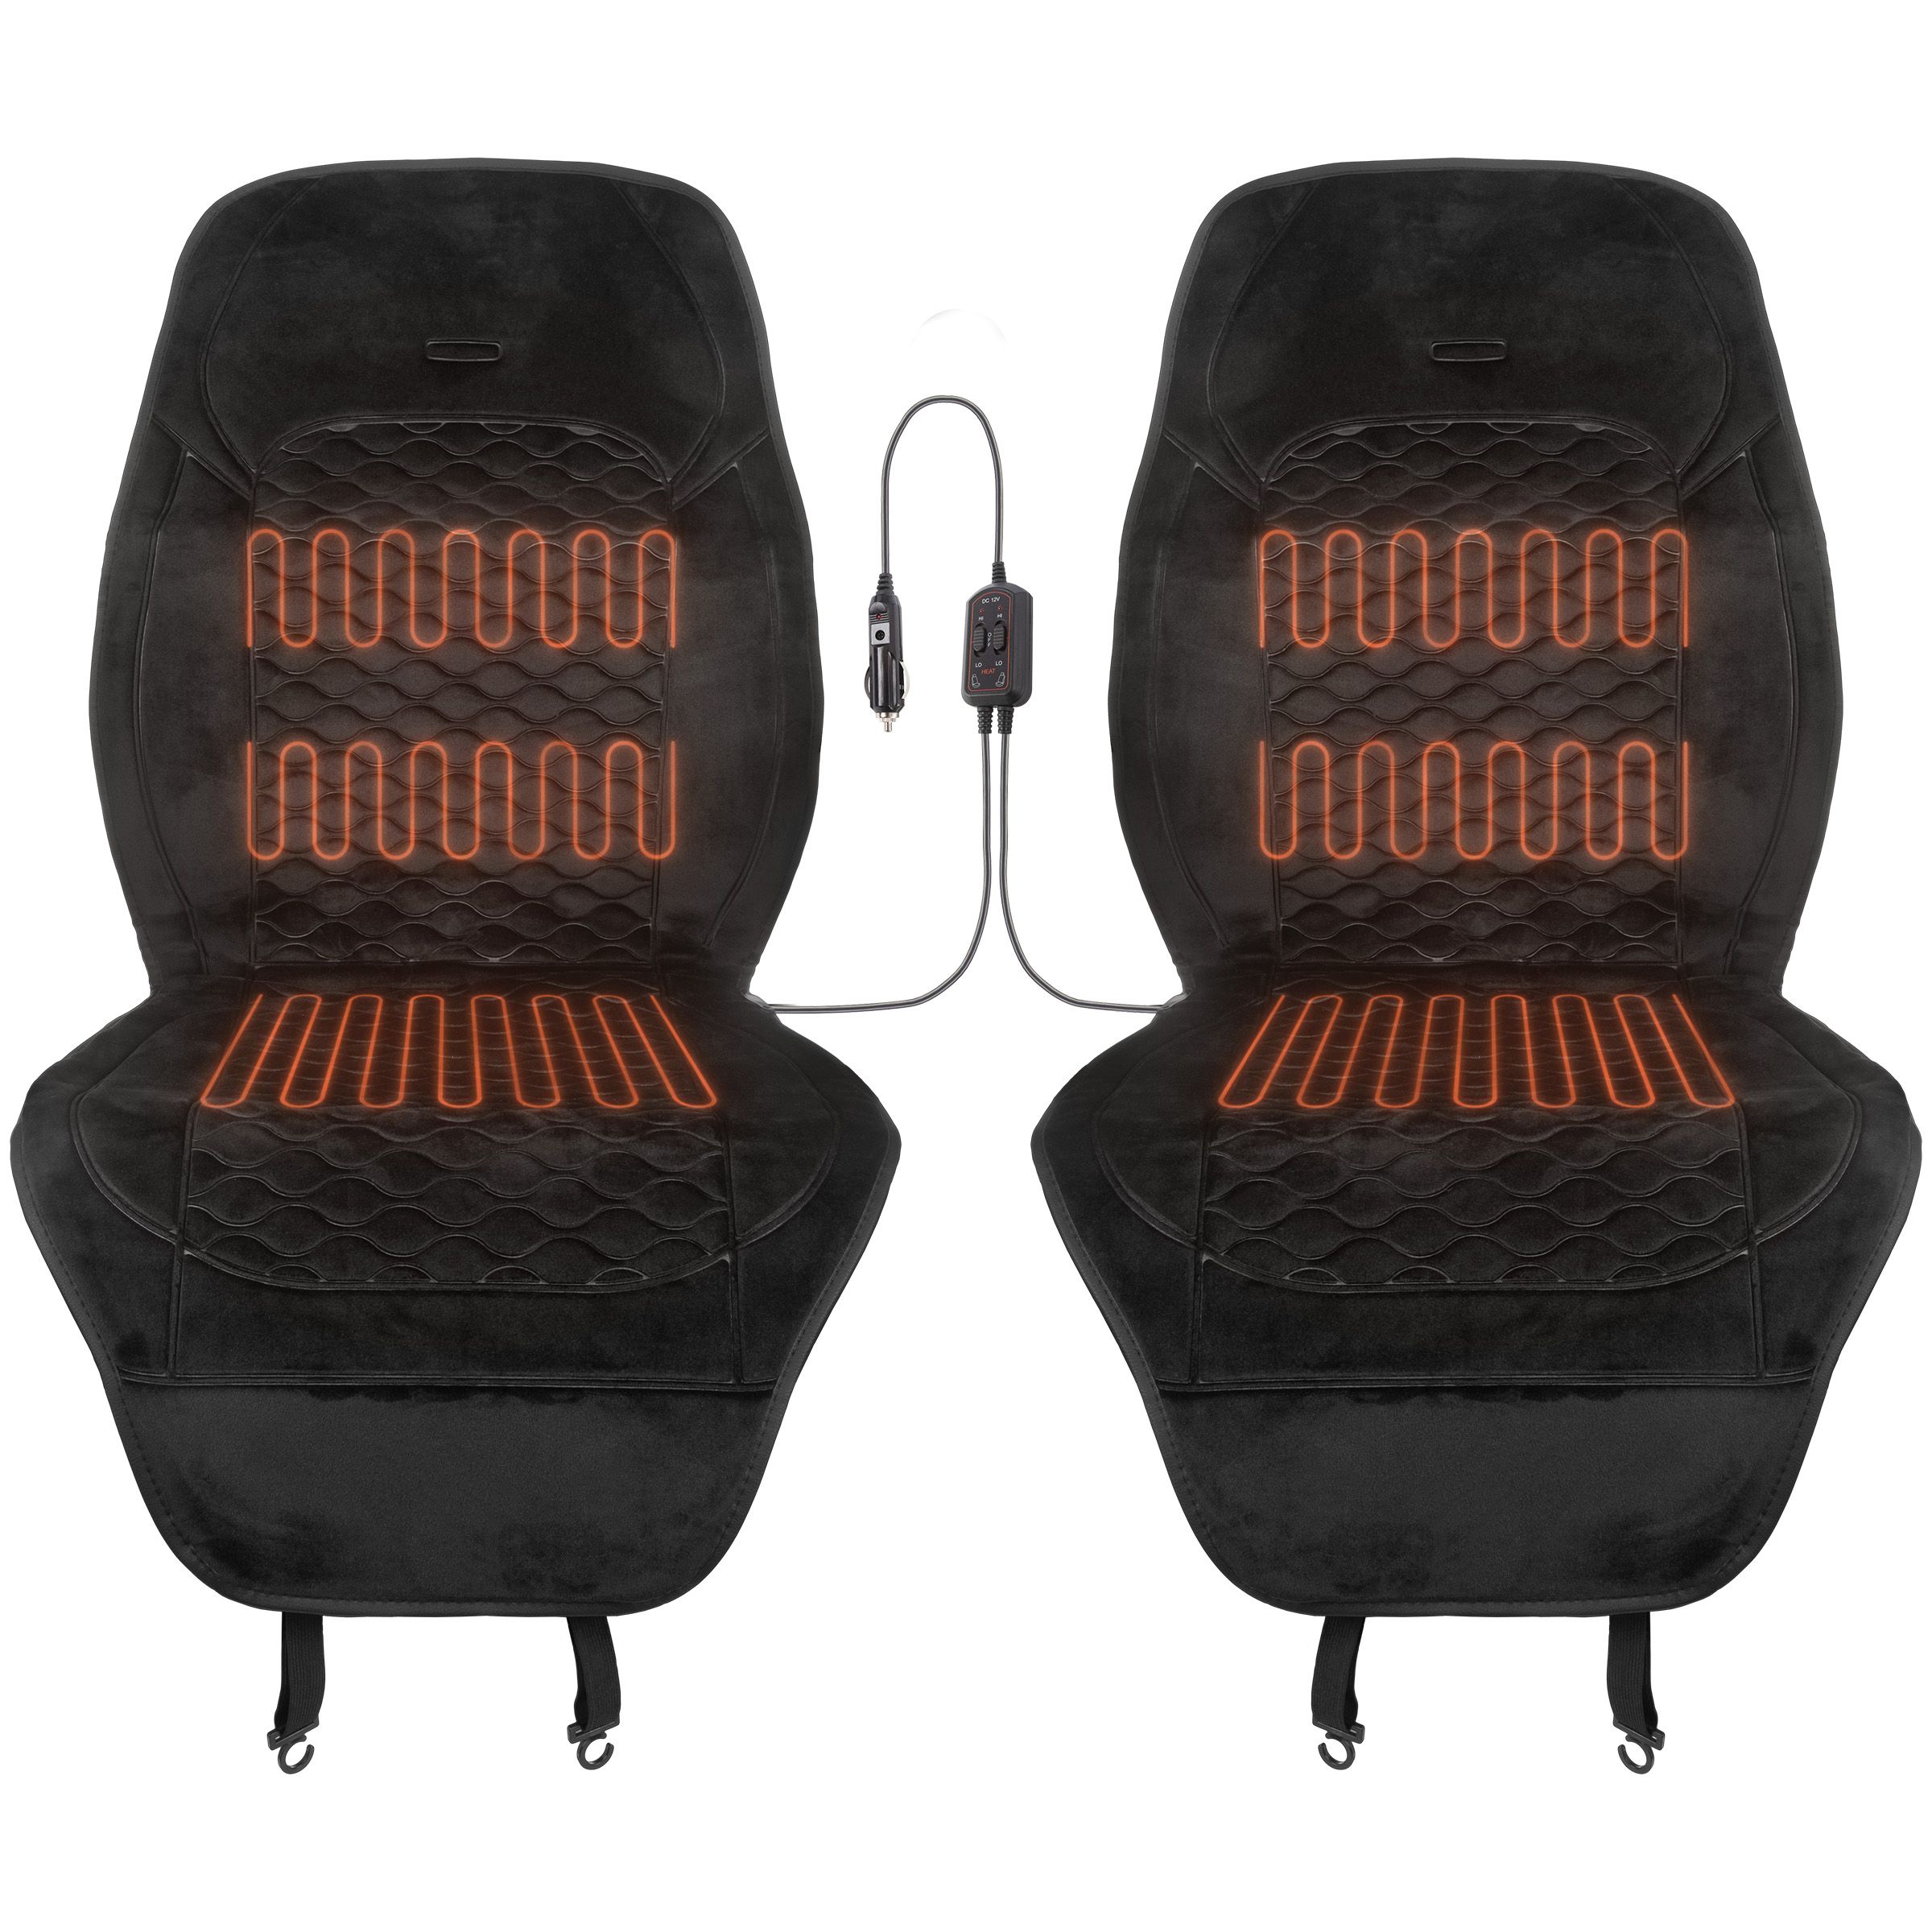 Fingerhut - Stalwart 12V Heated Car Seat Cover 2-Pack